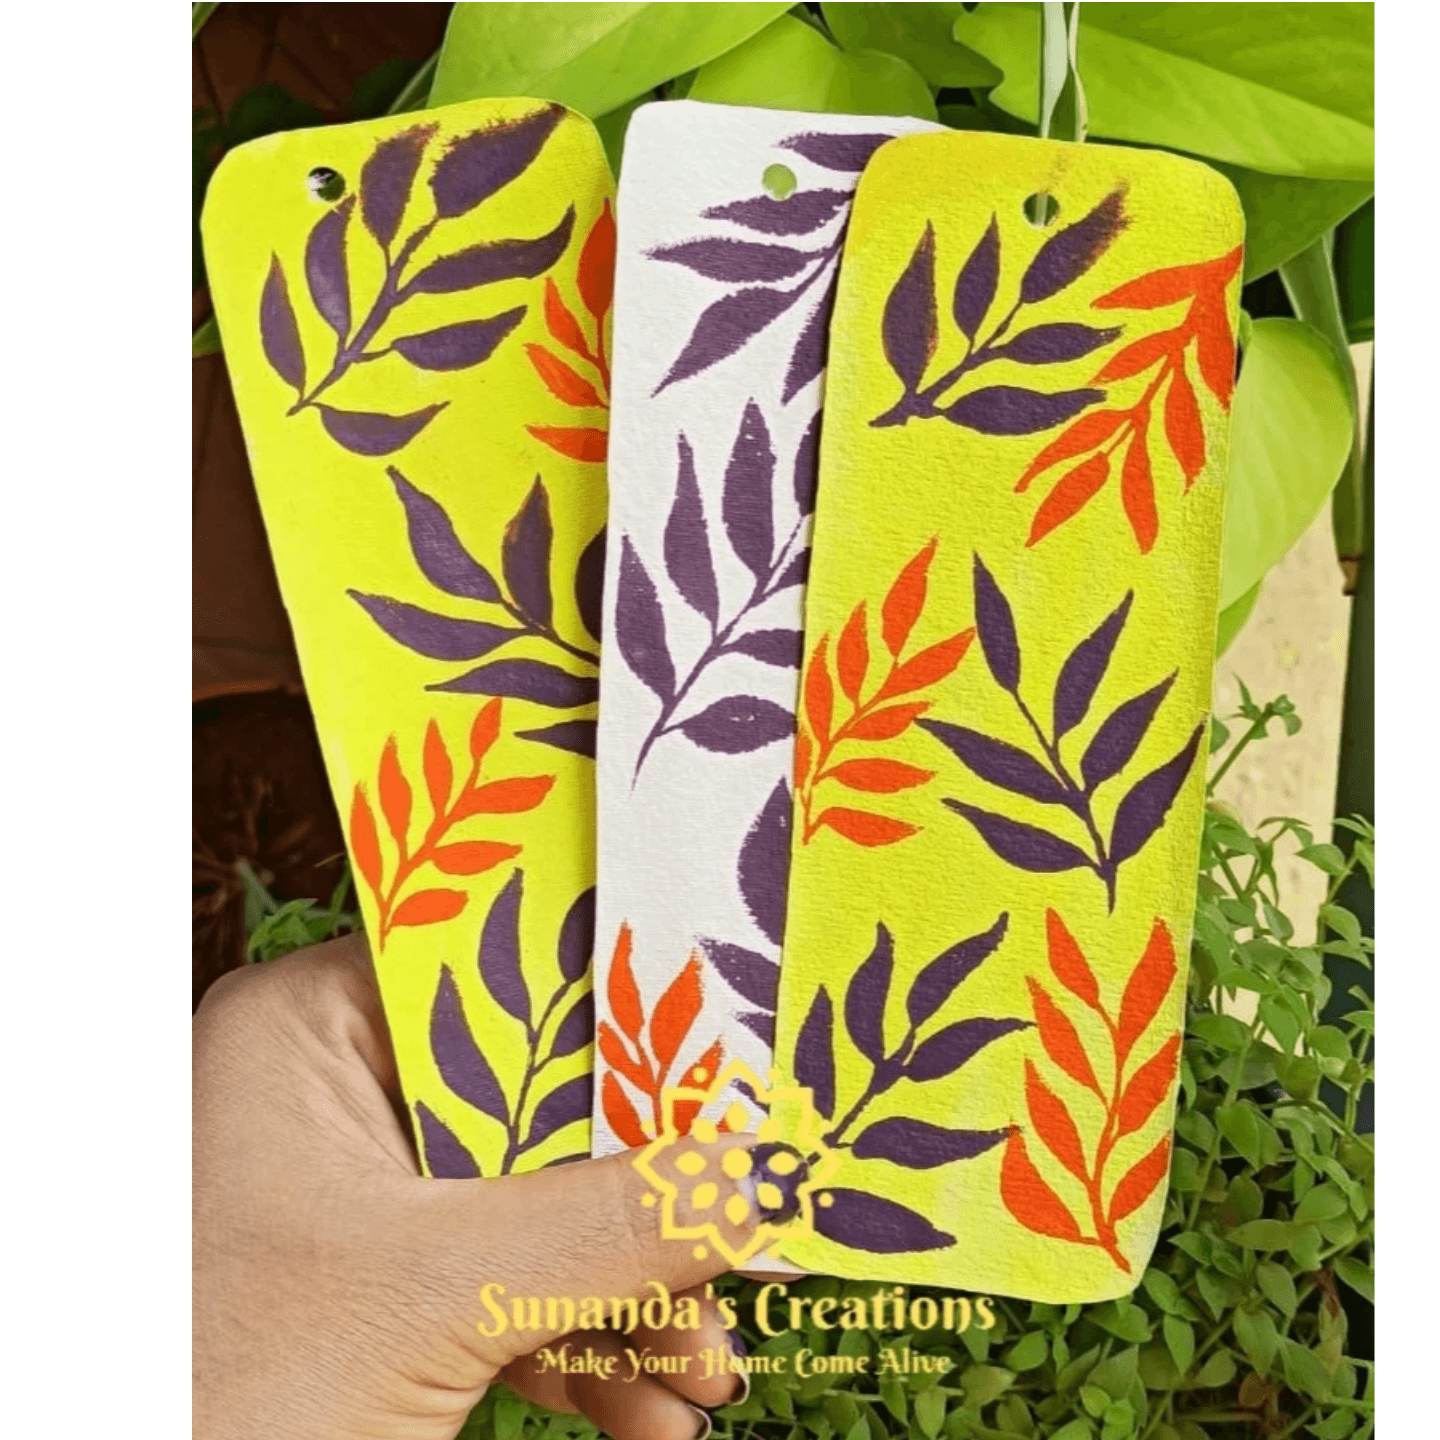 Leafe seriesHand paintedBookmarks